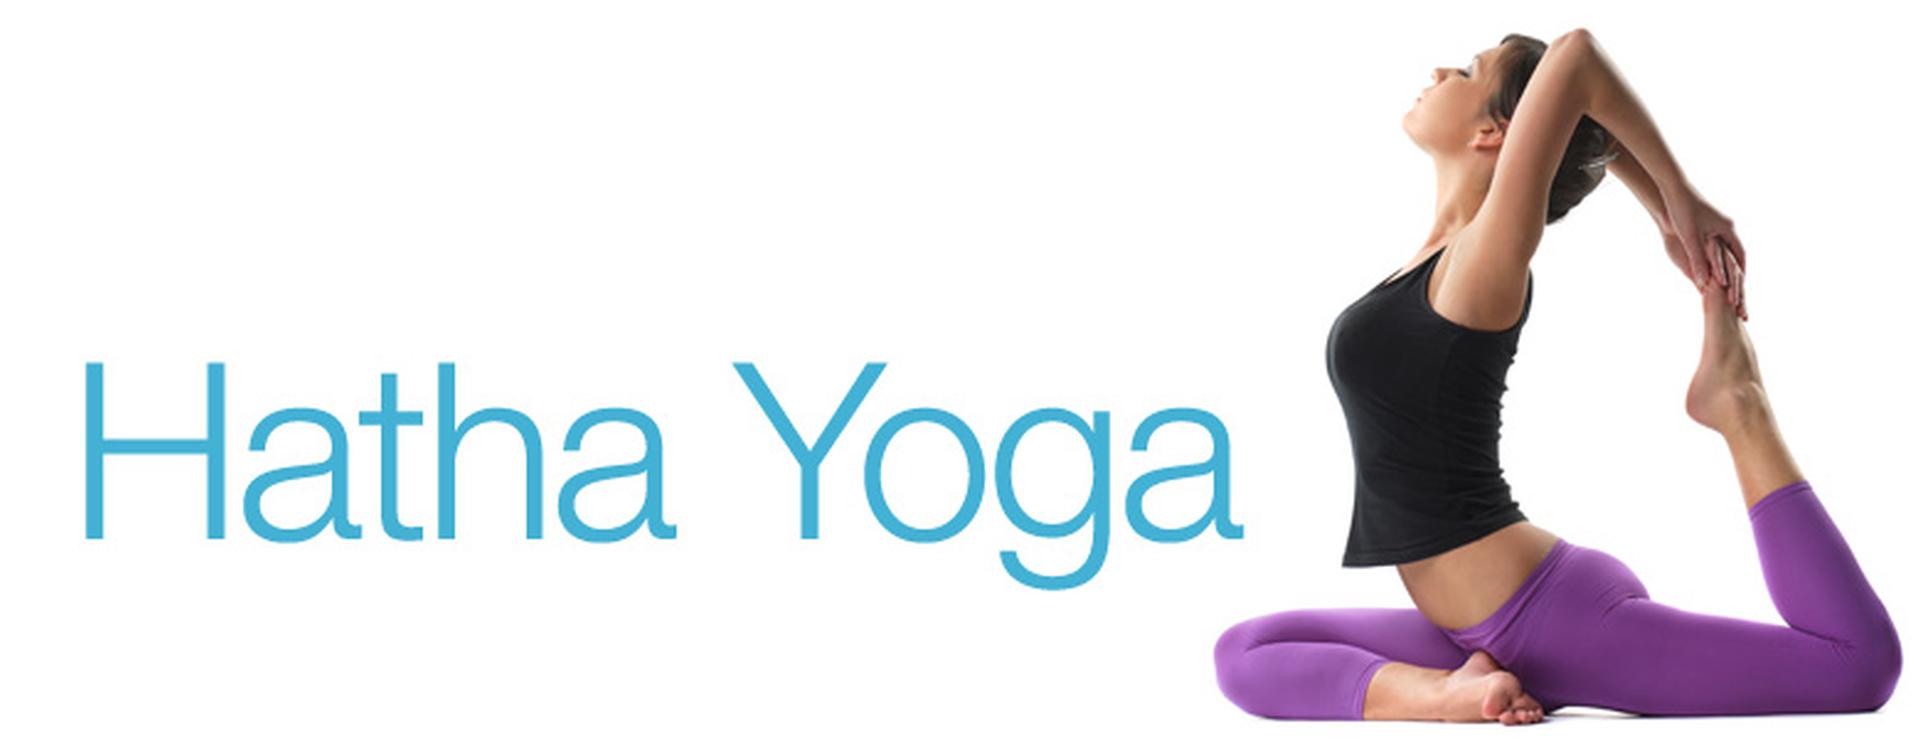 How is Hatha Yoga different from Bikram Yoga? 3